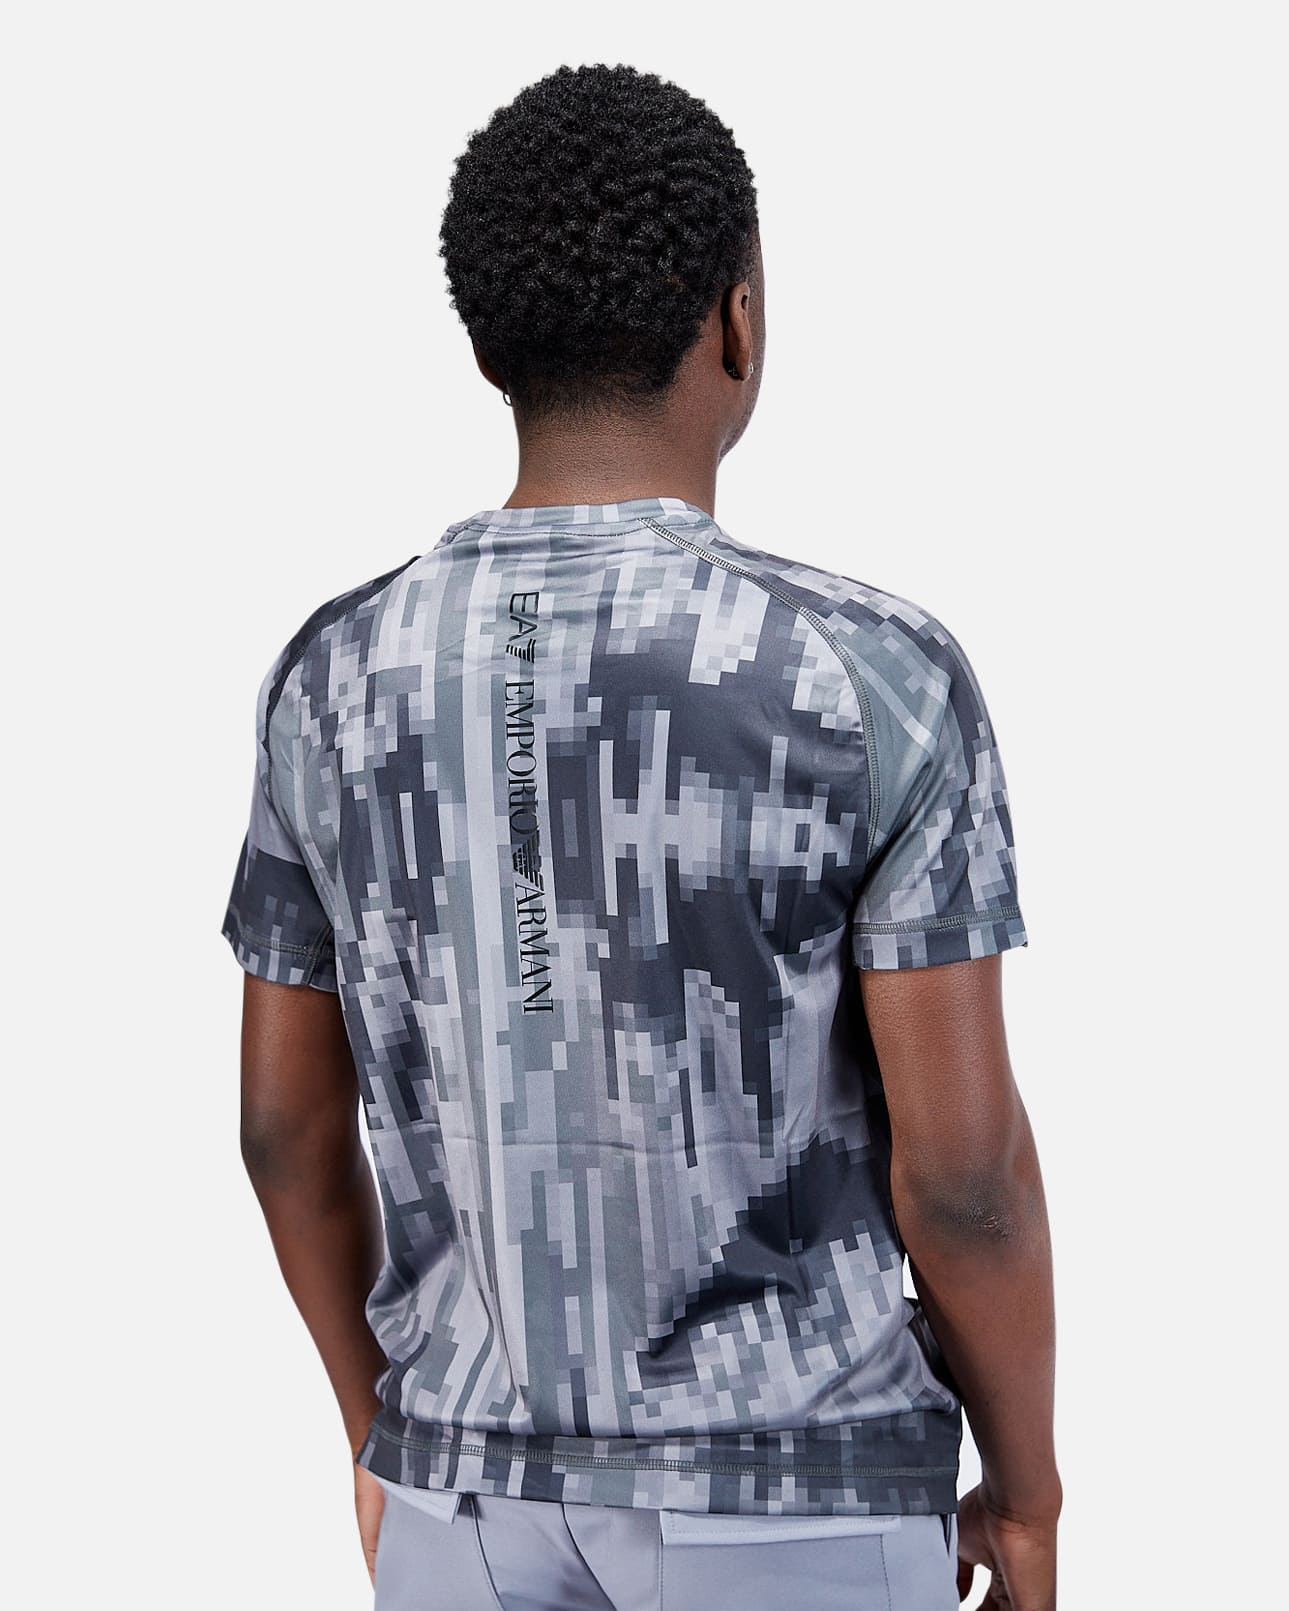 Emporio Armani Tee Ventus 7 T-shirt - Charcoal Gray